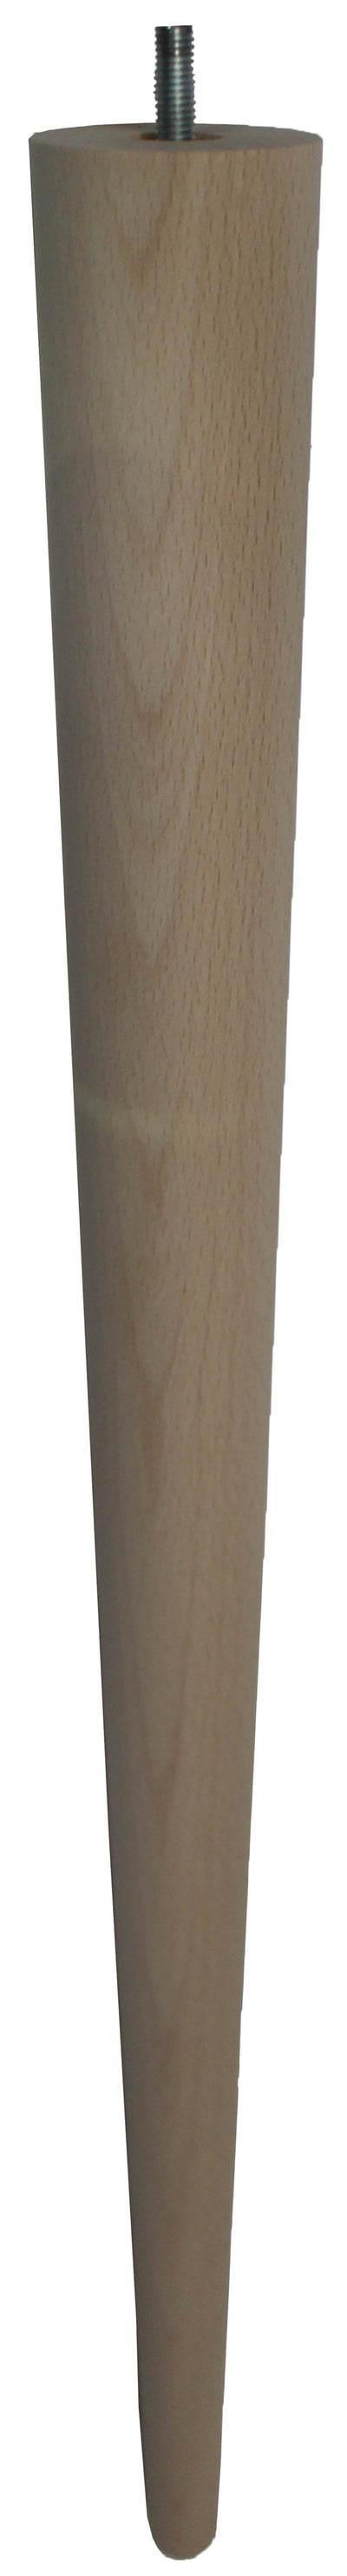 McCobb Table Legs Standard - Raw Finish - Set of 4 - with Standard 8mm Dowel Screw Fixing (M8)